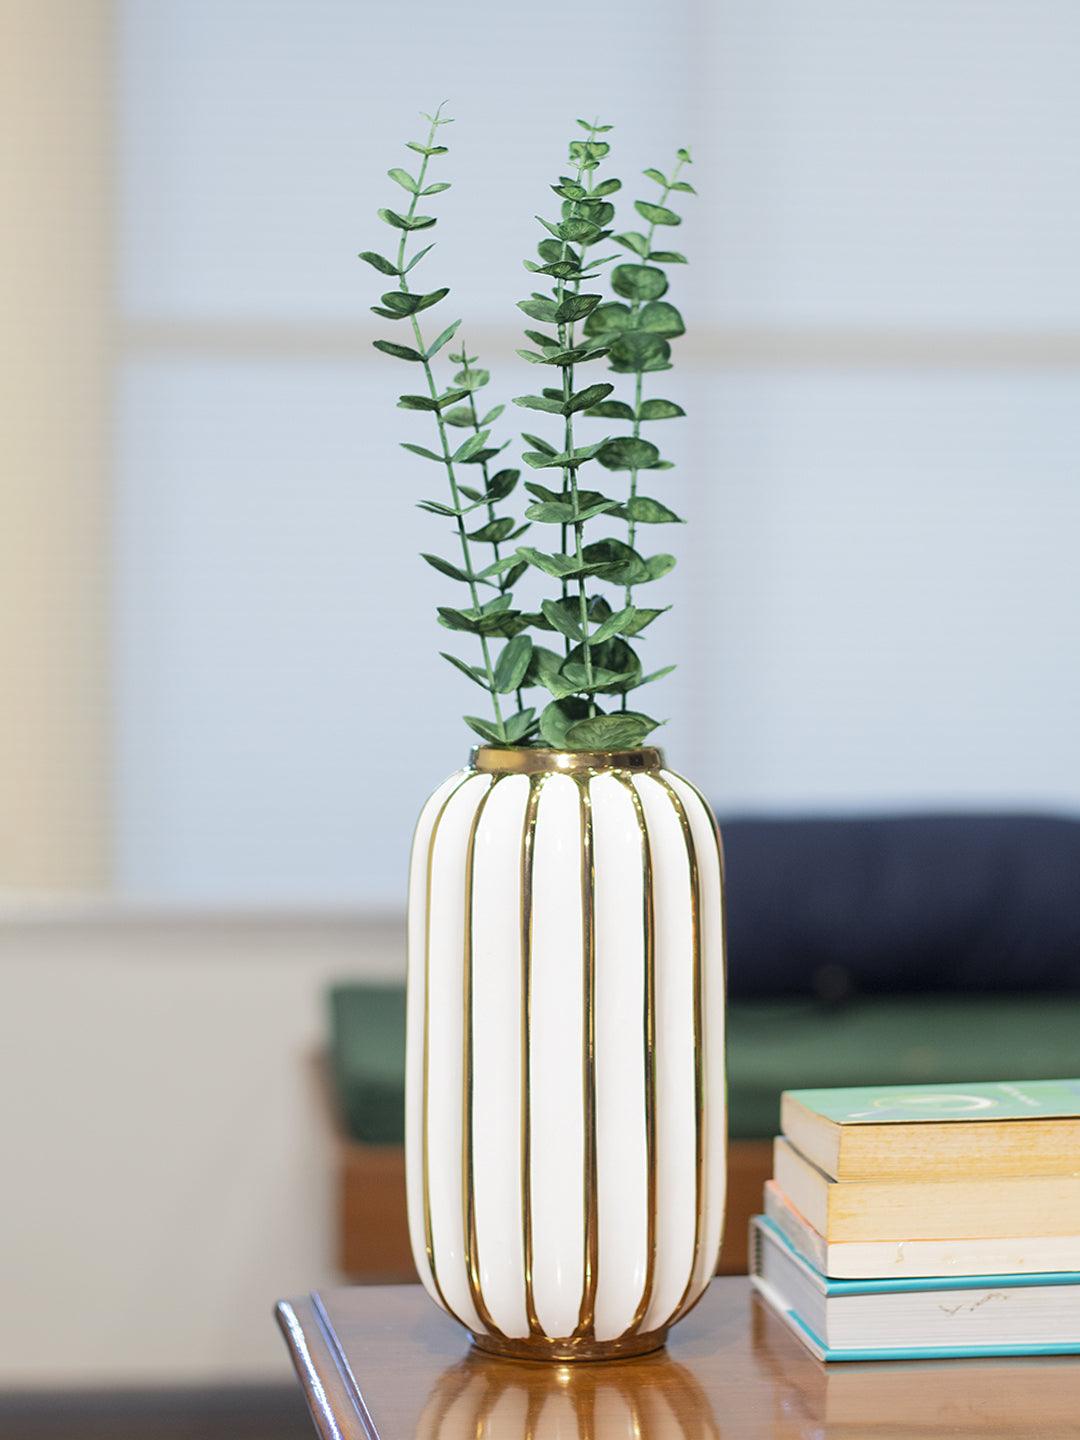 Grey Ceramic Vase - Ribbed Design, Flower Holder - 1